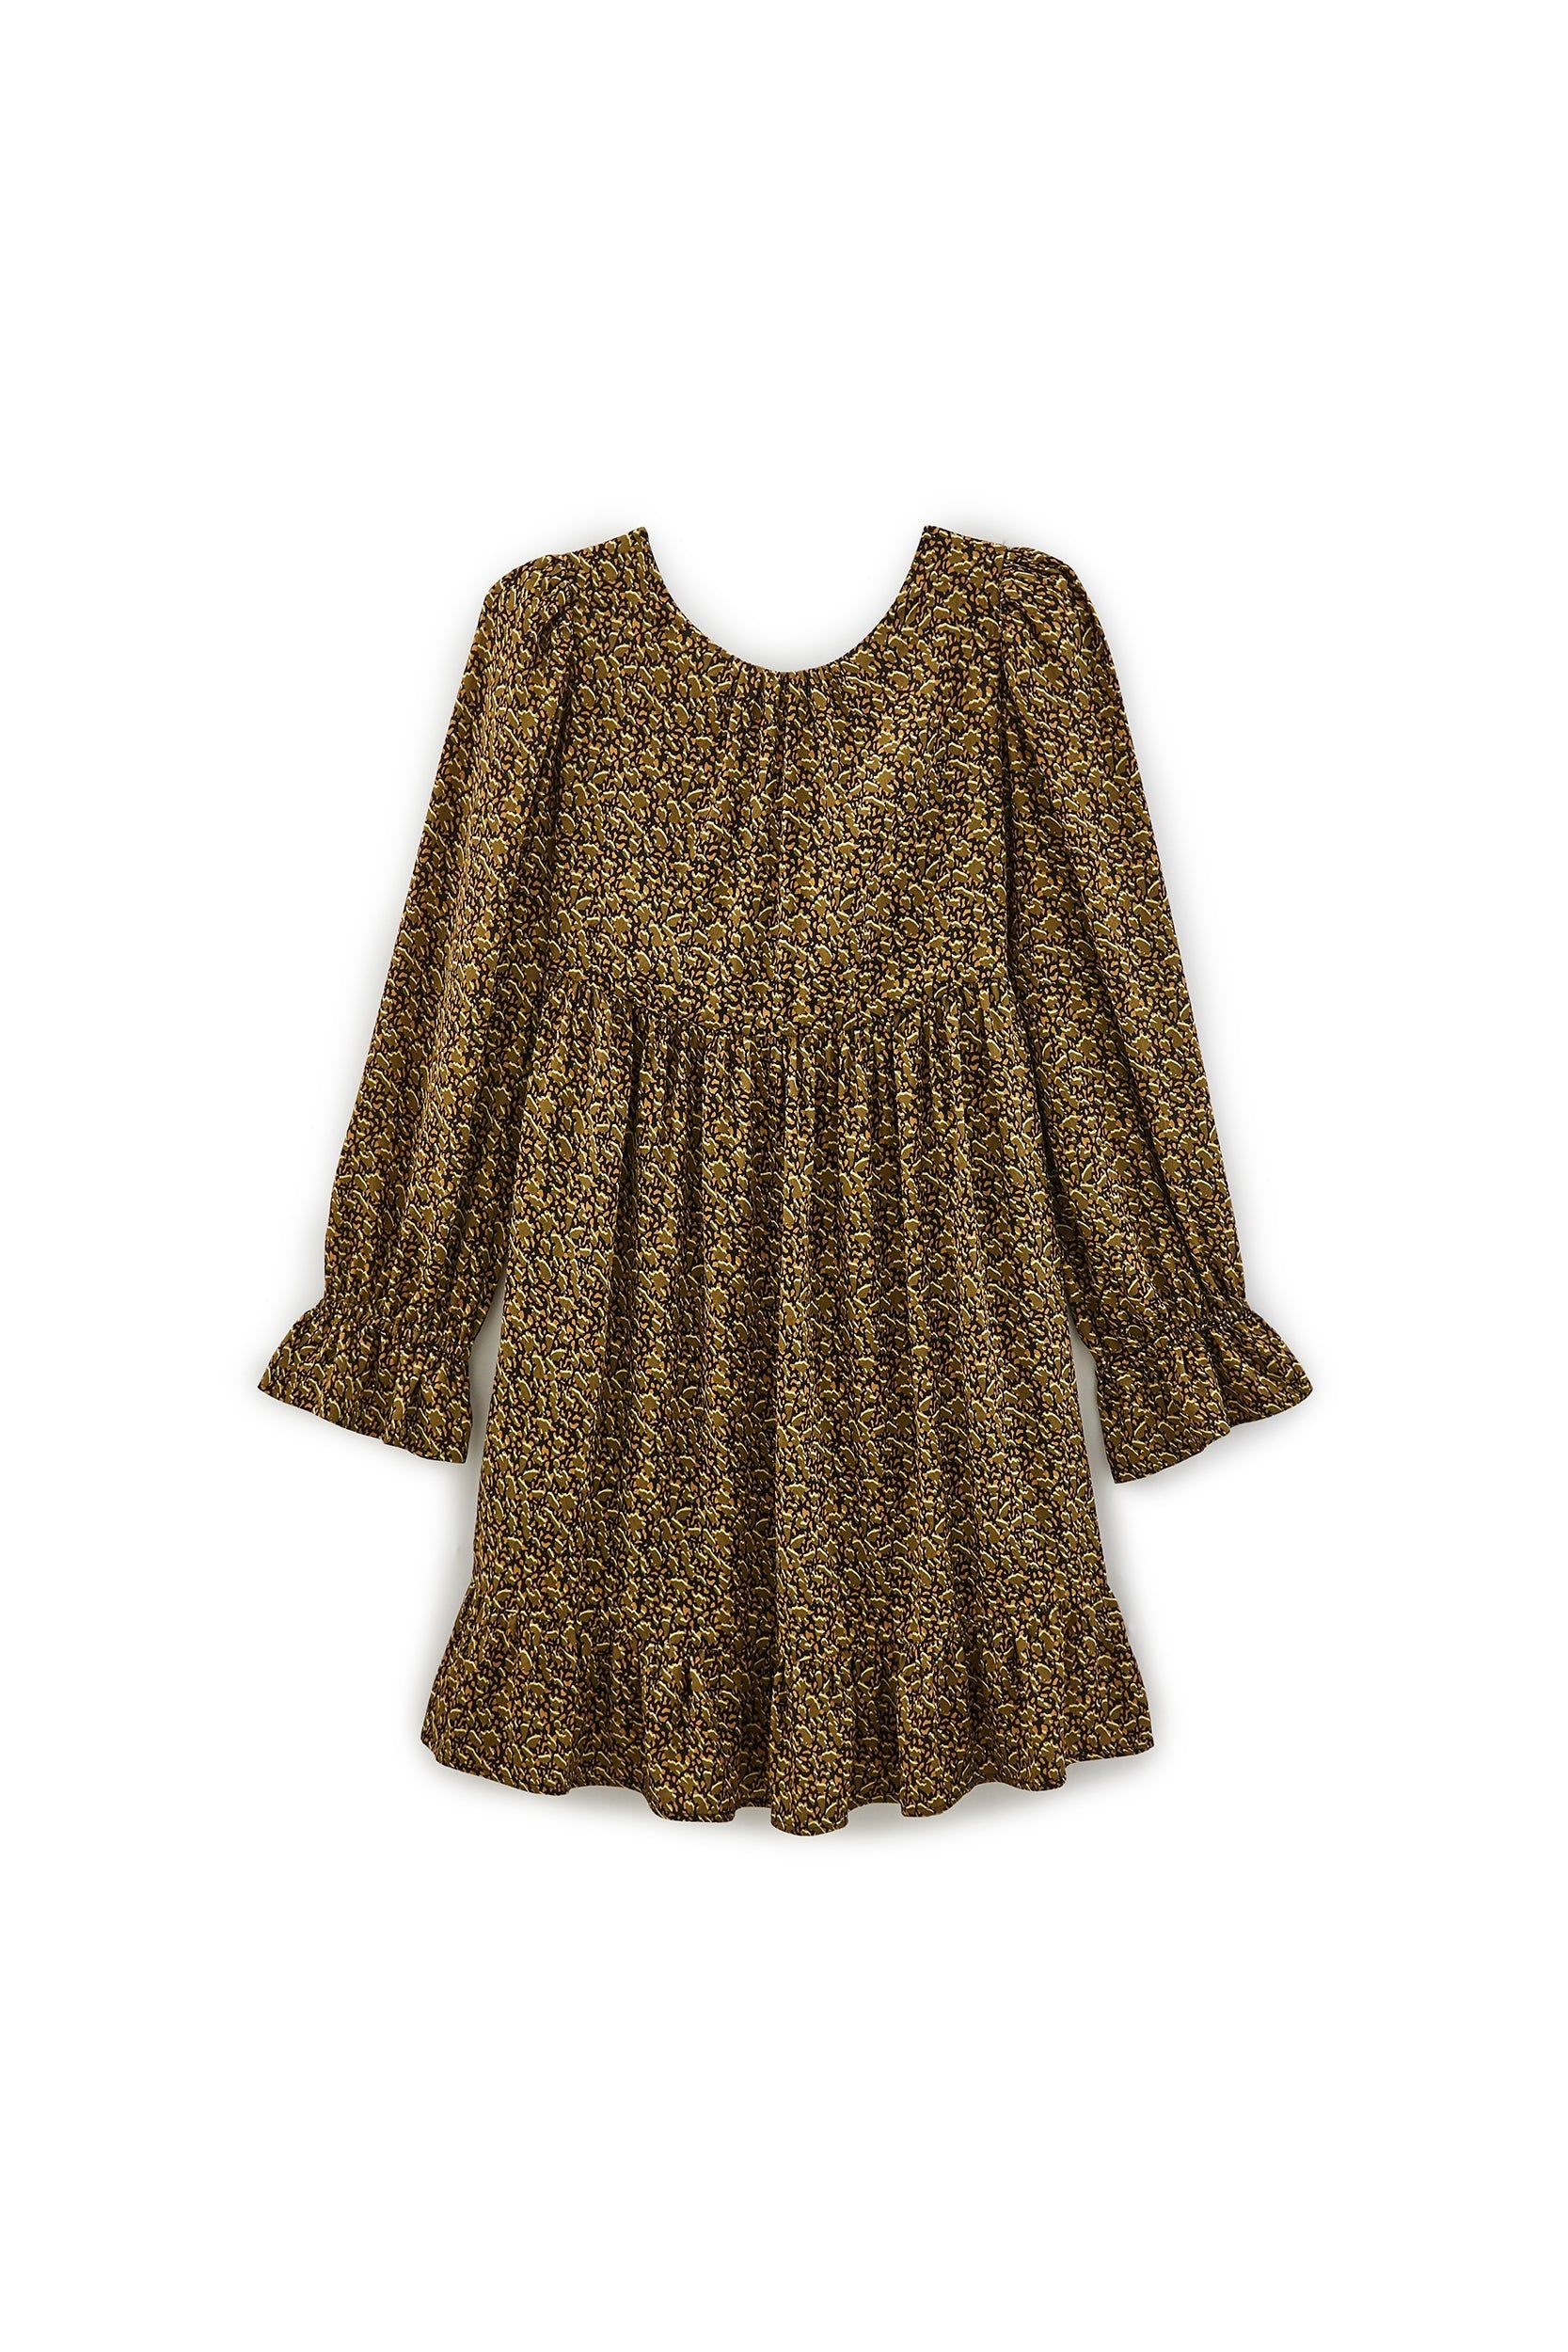 neo leopard print nova dress